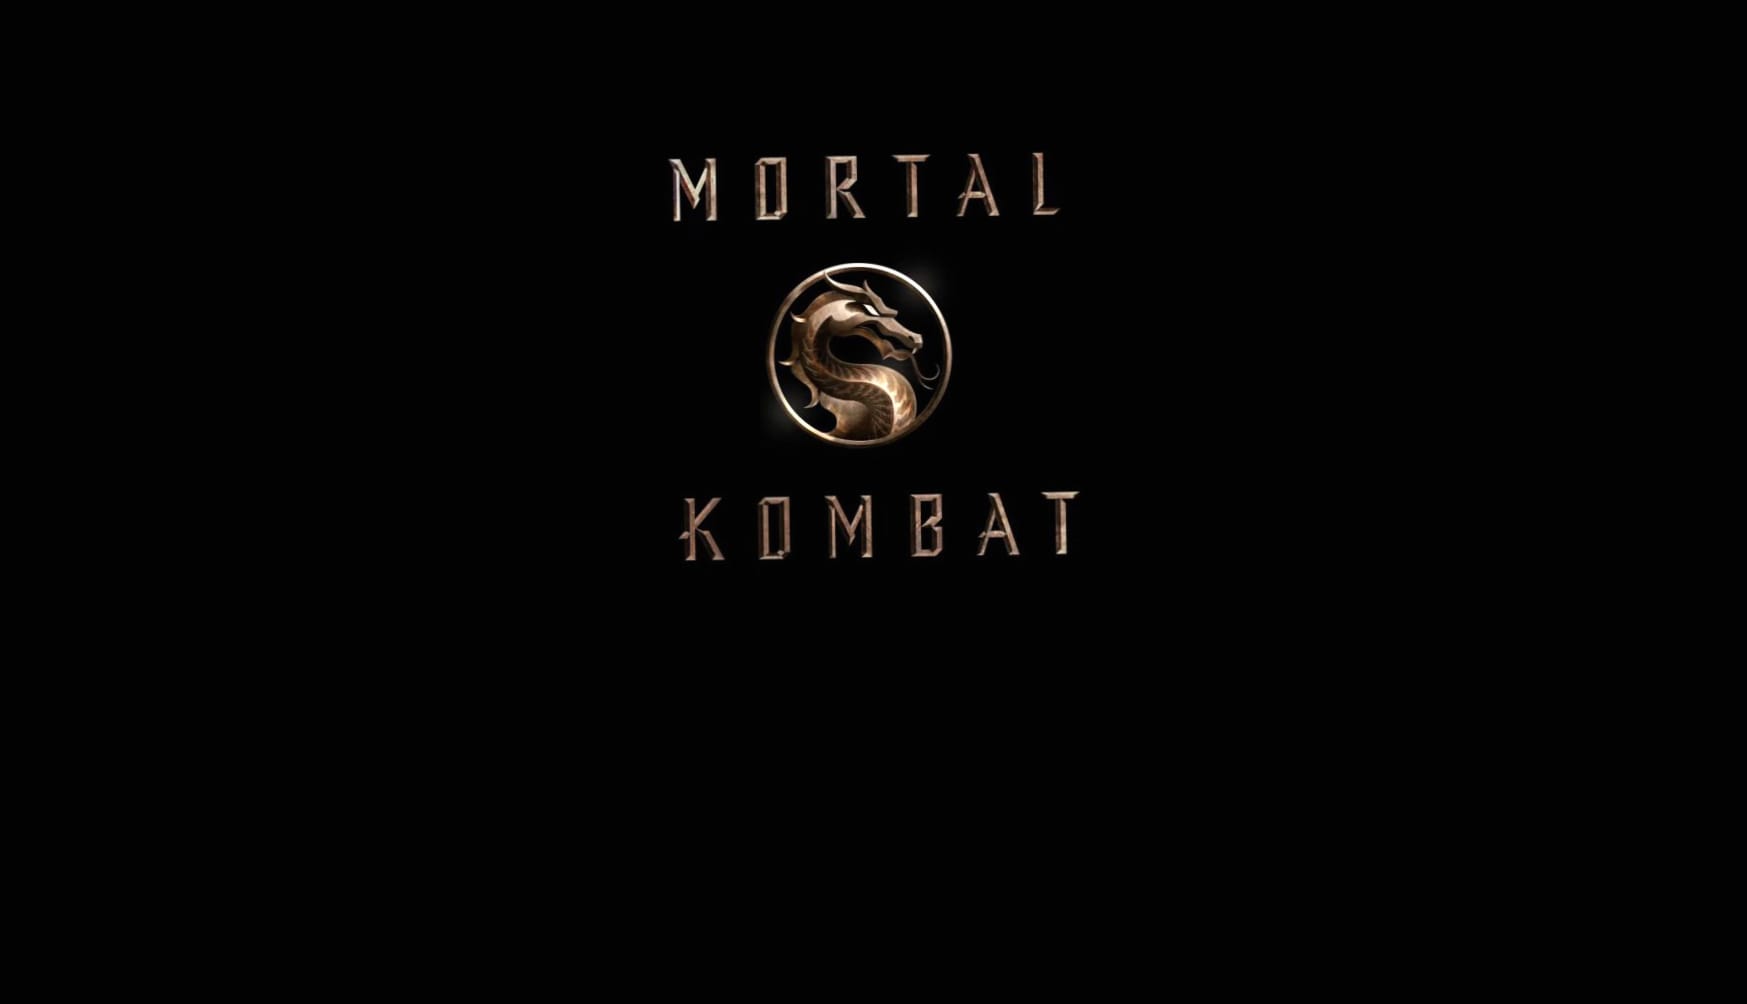 Mortal Kombat (2021) at 1280 x 960 size wallpapers HD quality